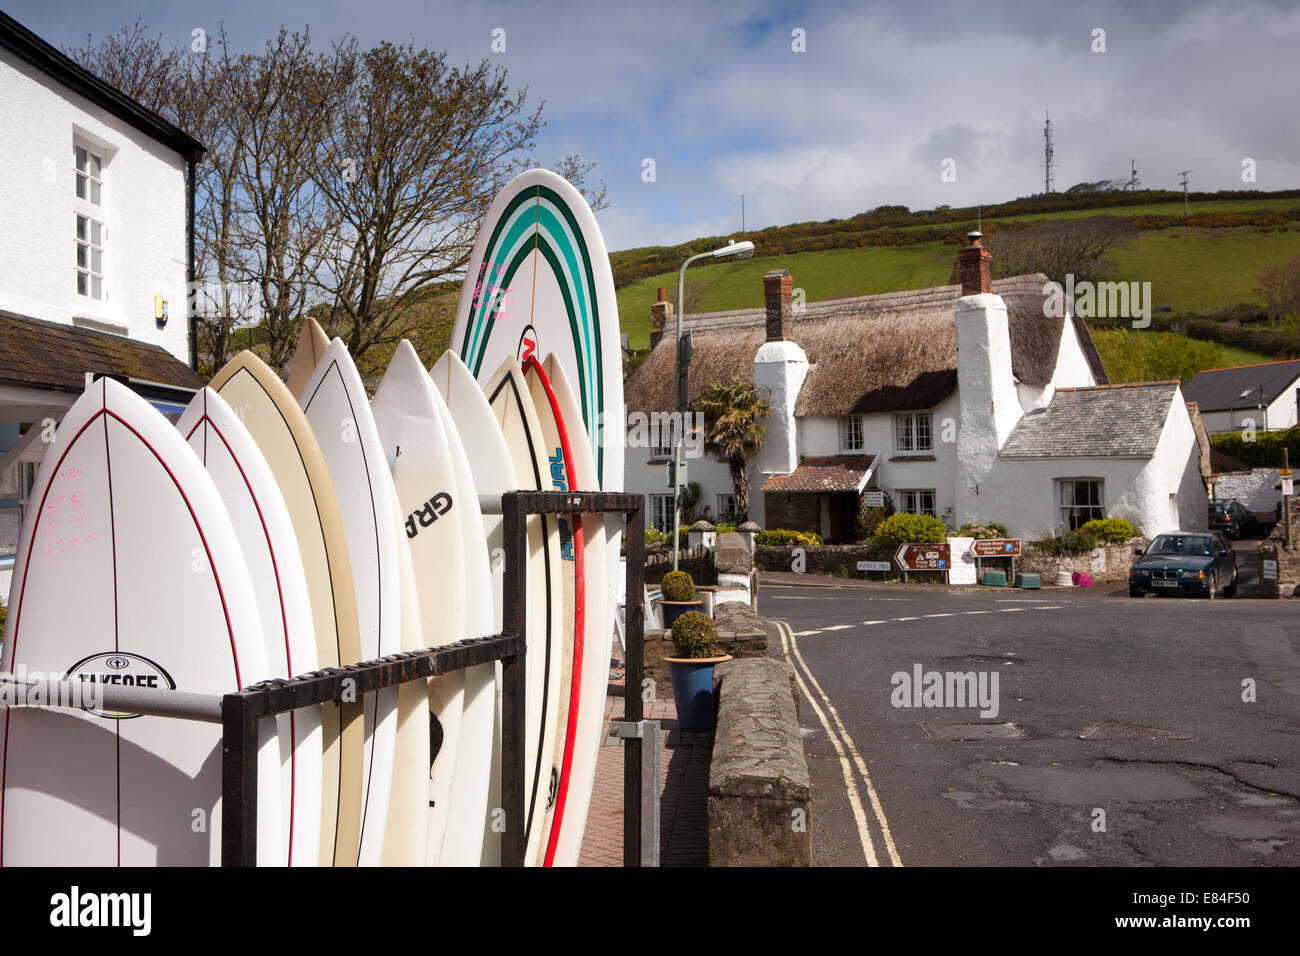 UK, England, Devon, Croyde village, surfboards for sale Stock Photo